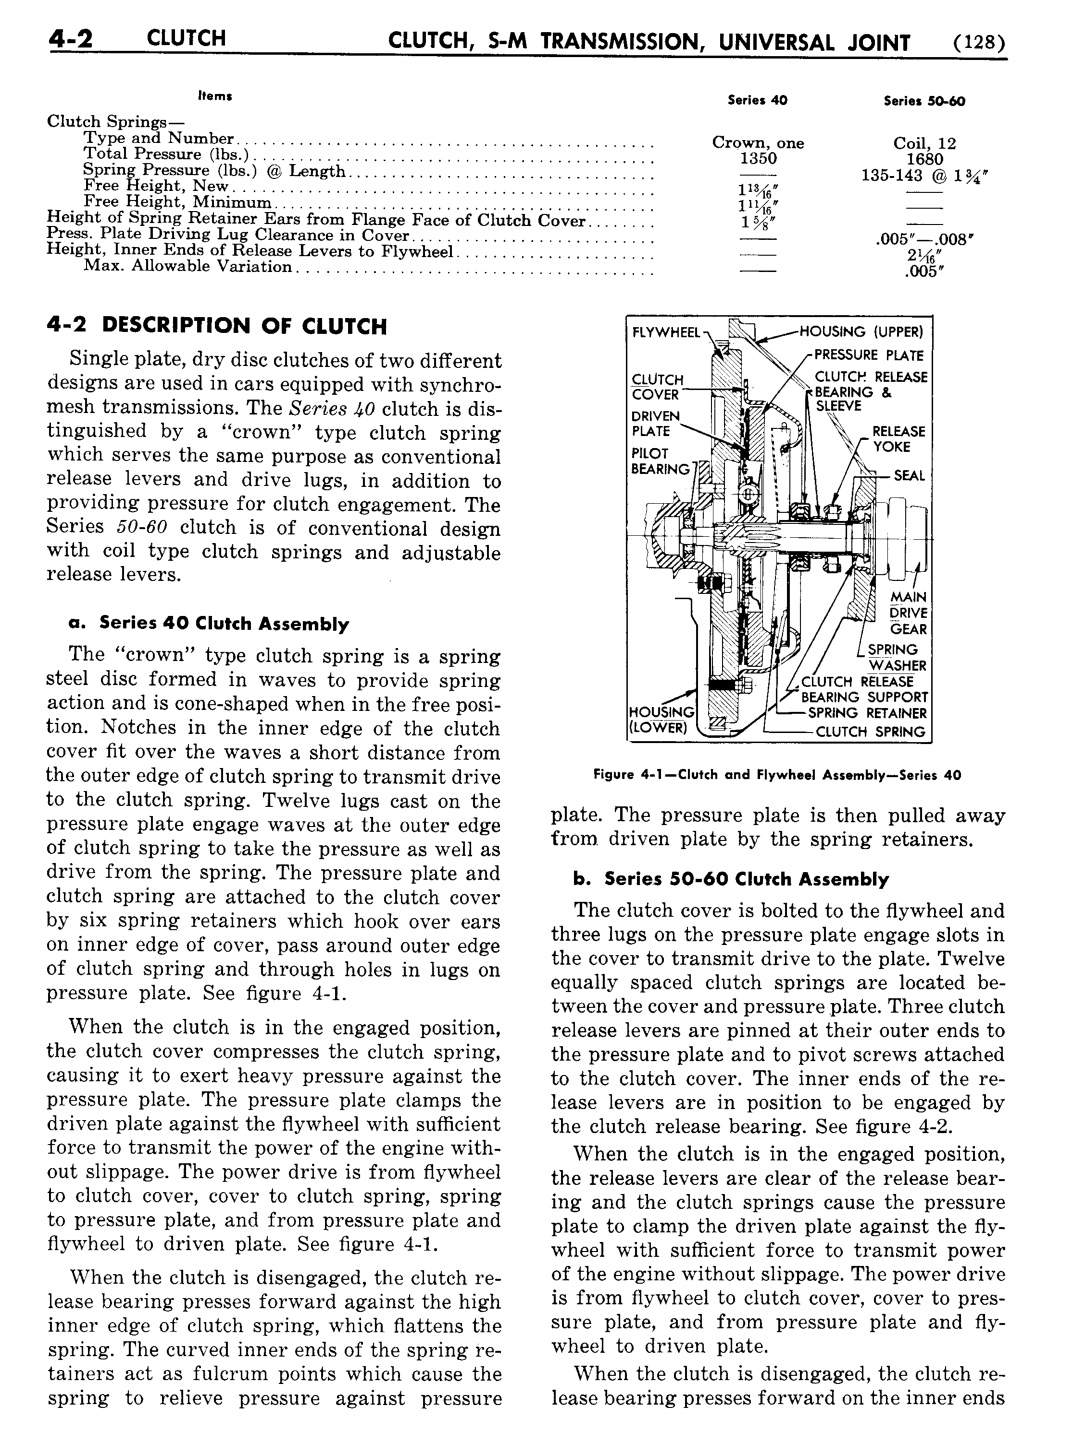 n_05 1954 Buick Shop Manual - Clutch & Trans-002-002.jpg